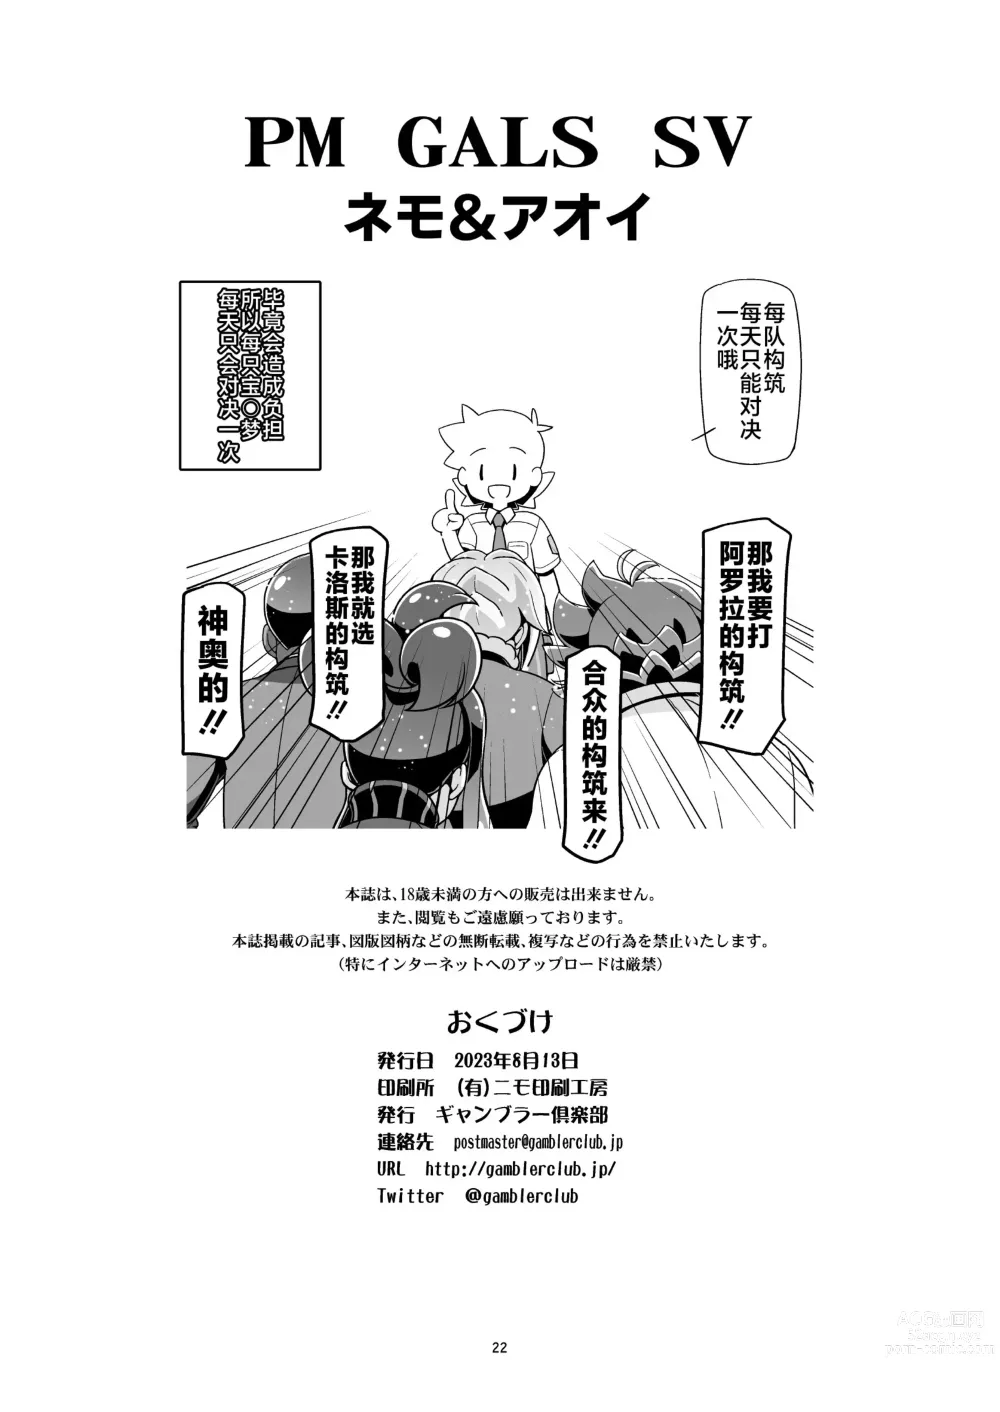 Page 22 of doujinshi ] PM GALS SV Nemo & Aoi